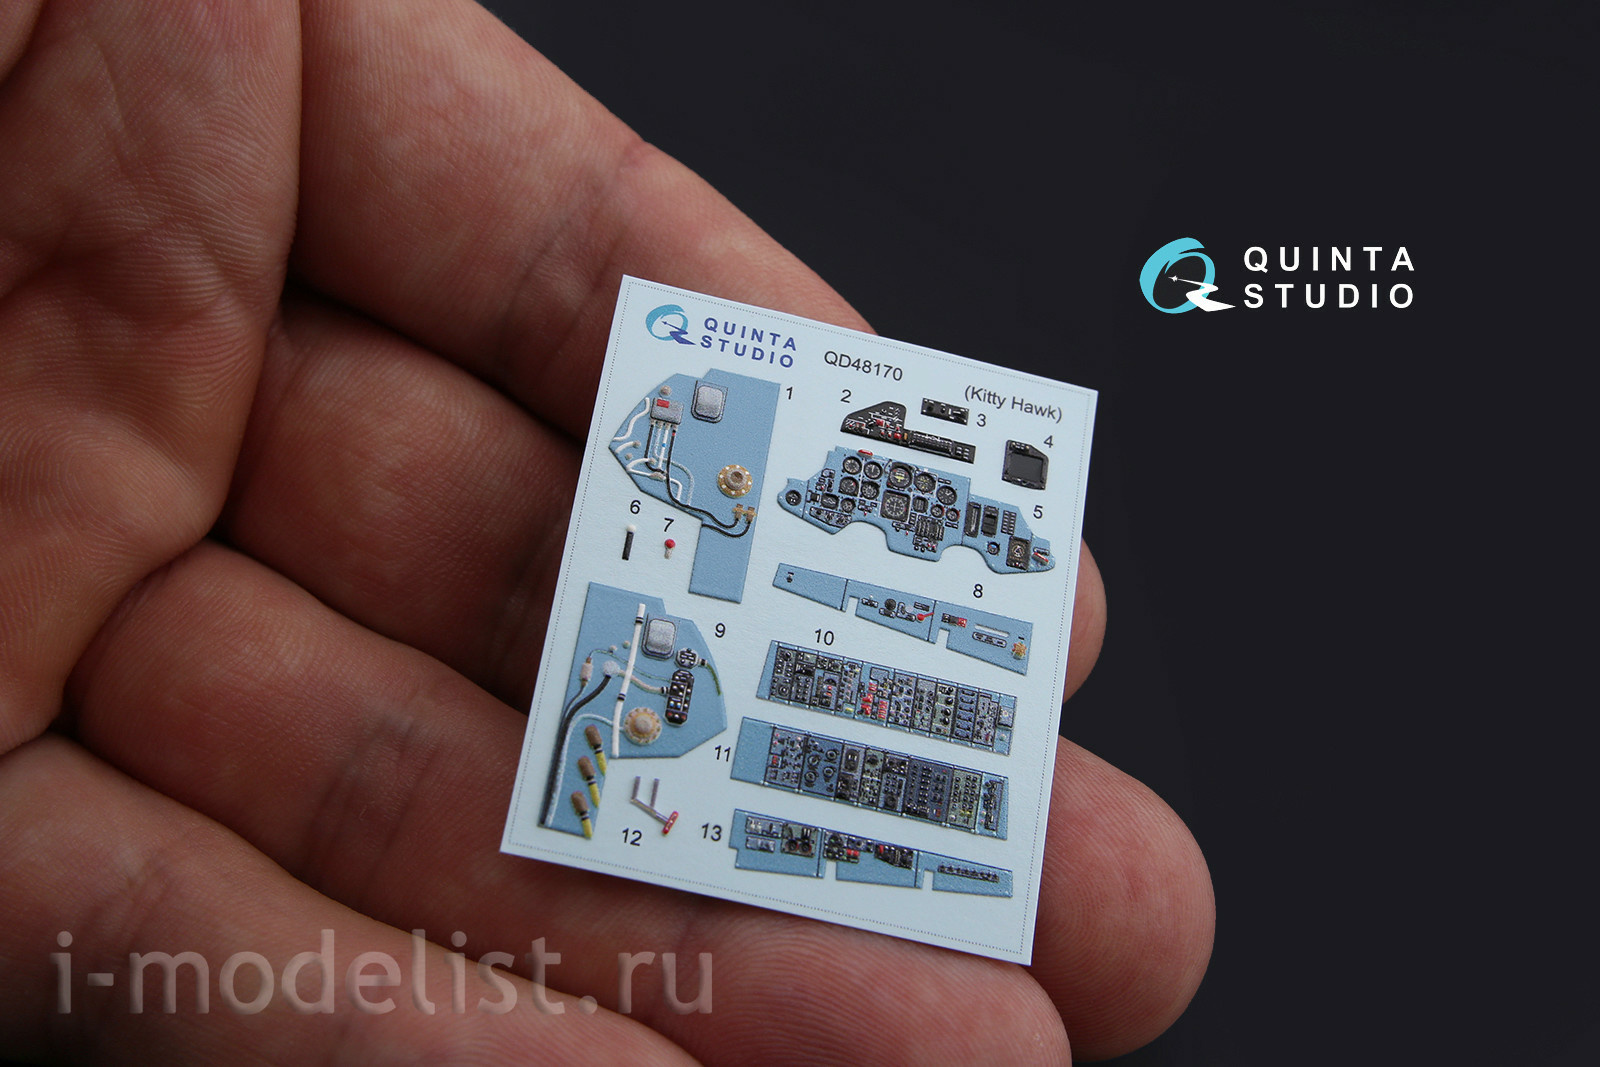 QD48170 Quinta Studio 1/48 3D Decal Cabin interior Sukhoi-27 (for KittyHawk model)